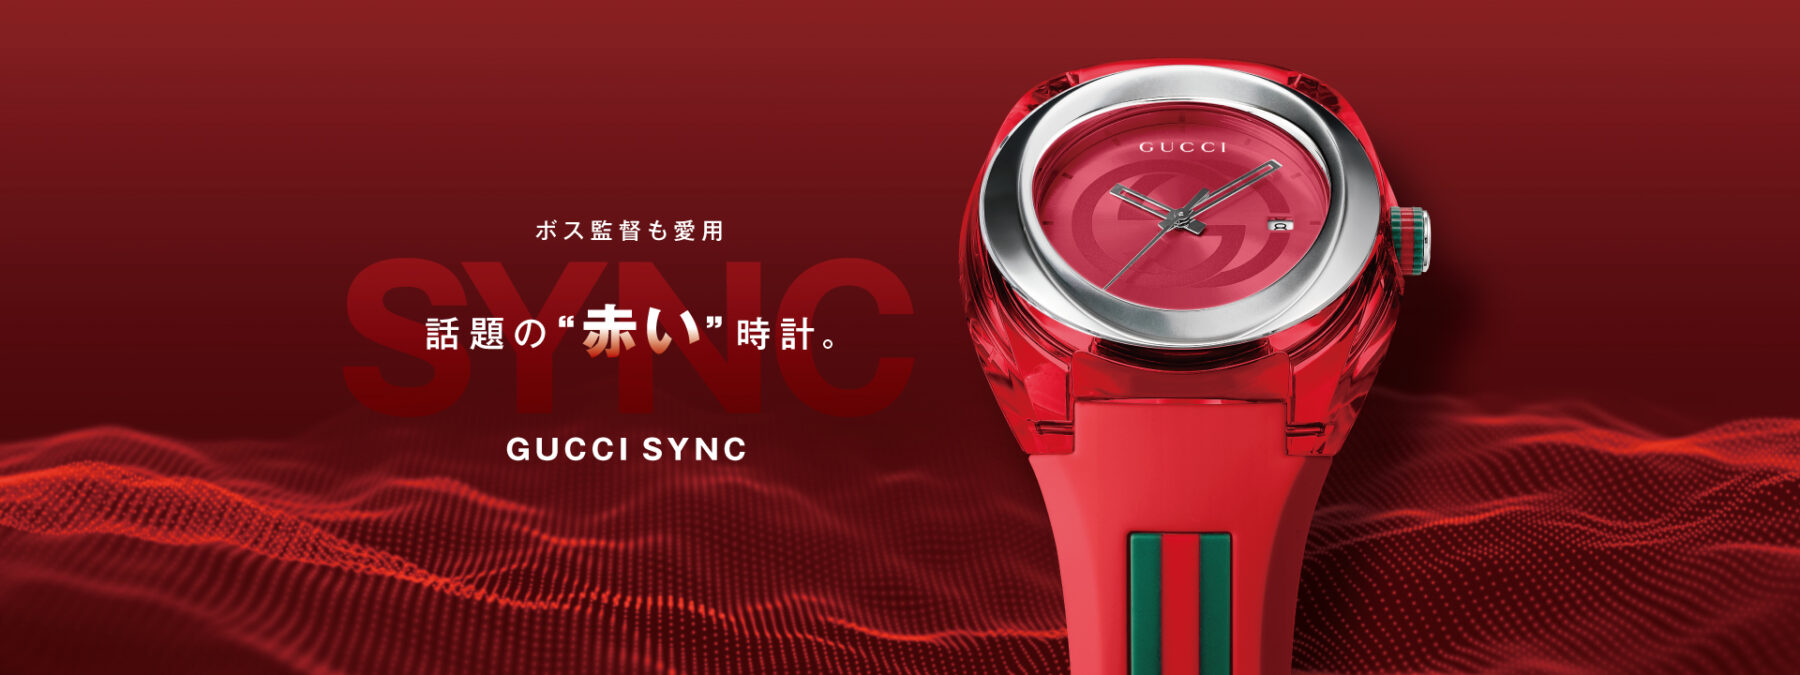 GUCCI SYNC（グッチ シンク）話題の赤い時計|グッチ(GUCCI)|海外